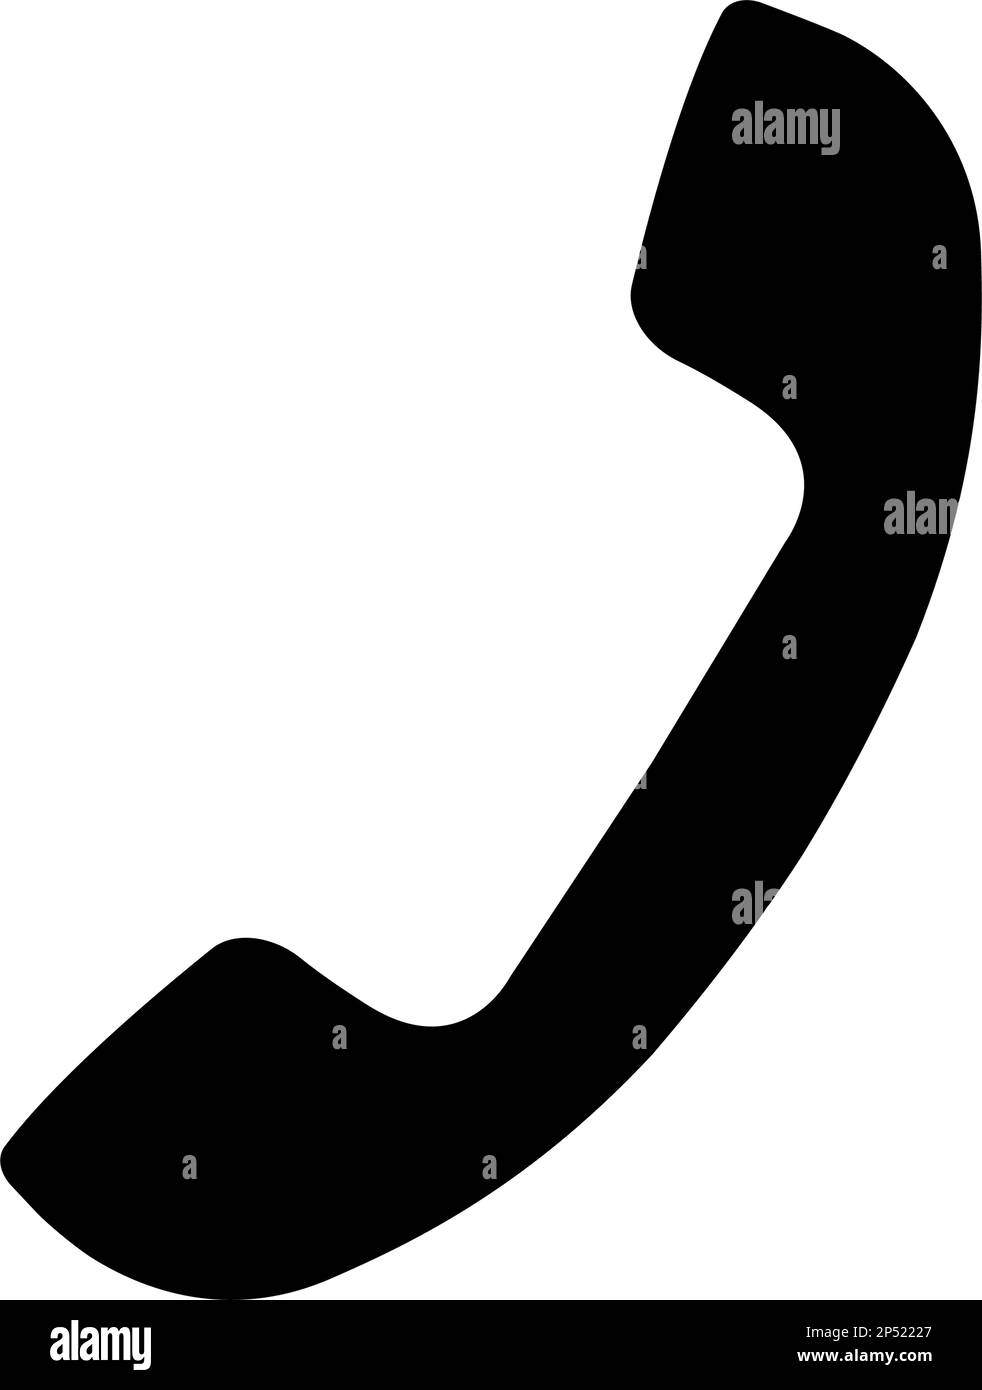 Symbol „Telefon“. Telefonsymbol im Retro-Stil. Abbildung eines flachen Vektors Stock Vektor